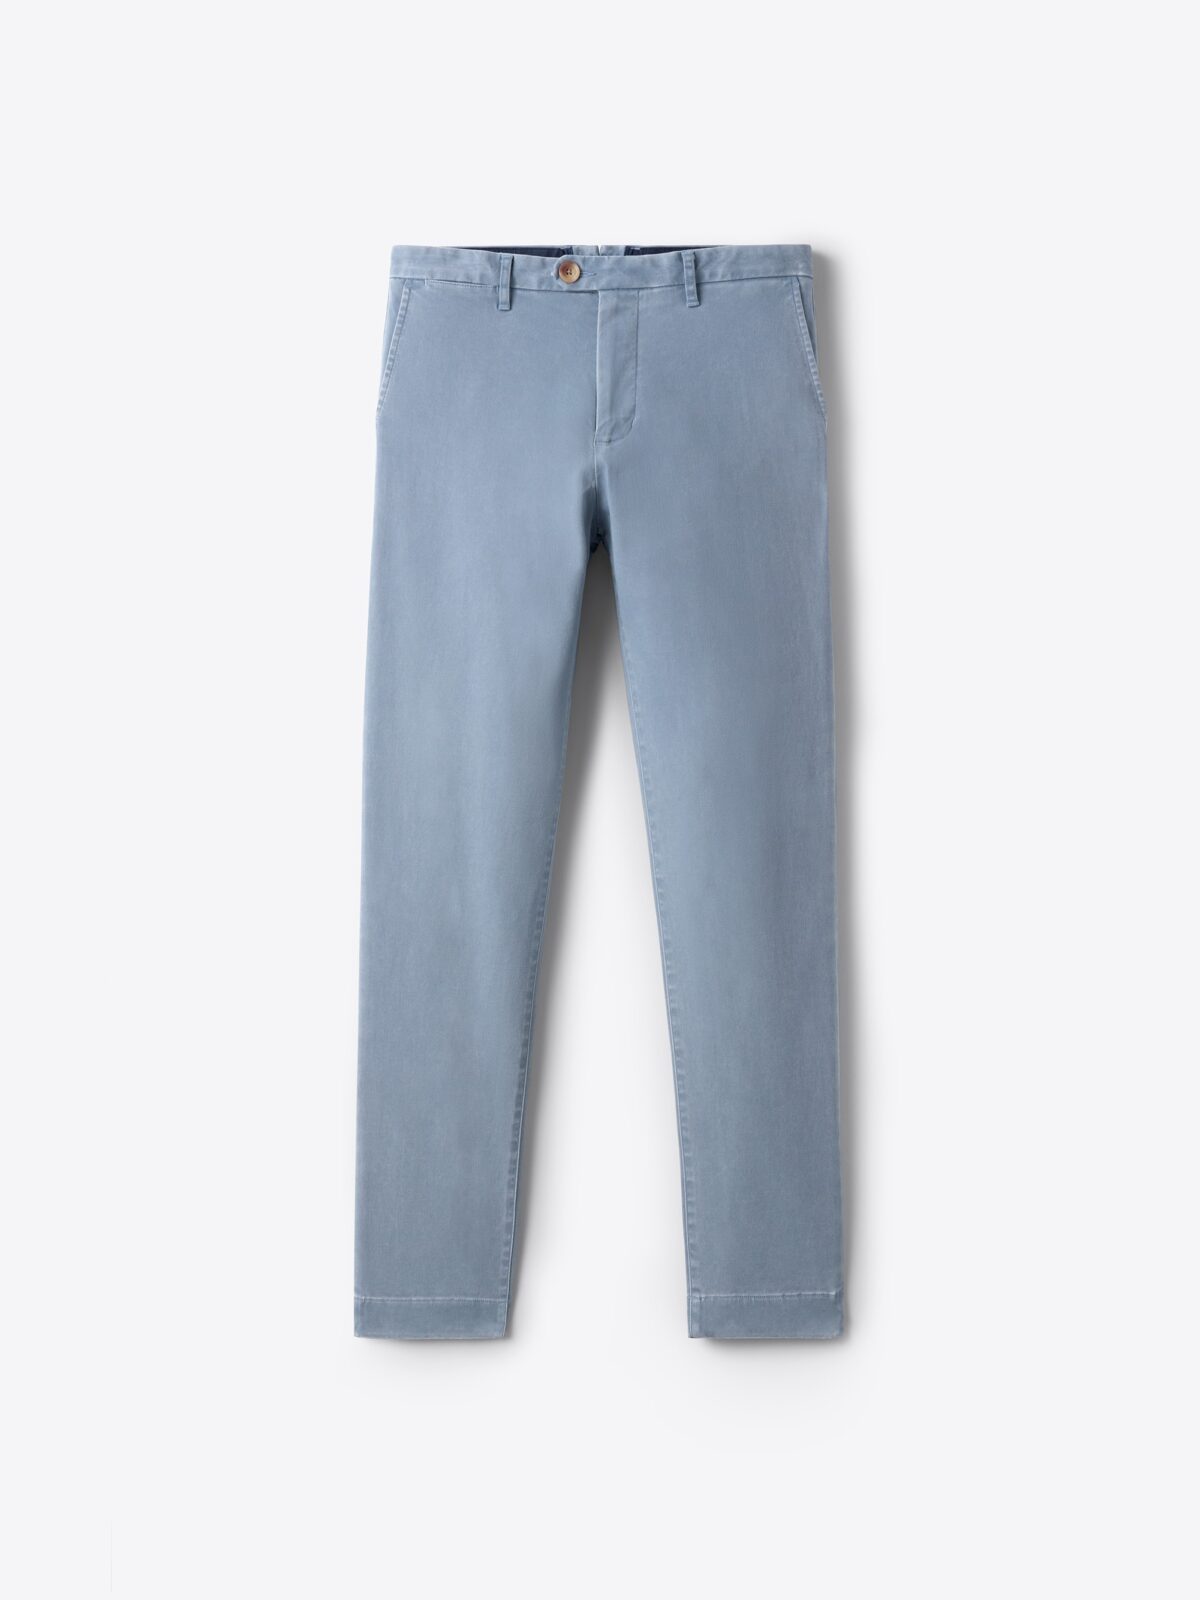 Japanese 12oz Light Wash Indigo Stretch Jeans - Custom Fit Pants